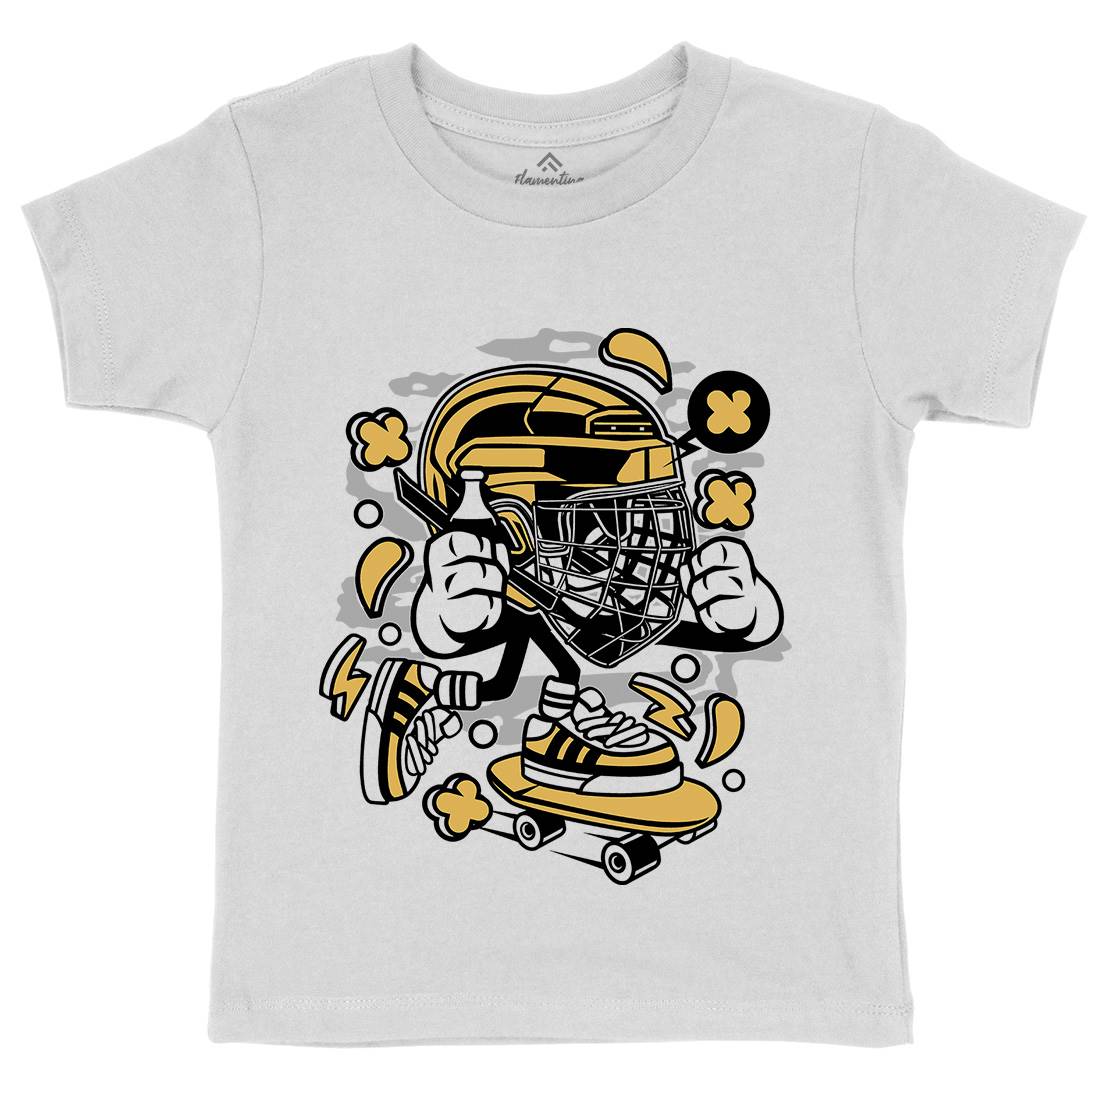 Hockey Skater Kids Crew Neck T-Shirt Sport C143